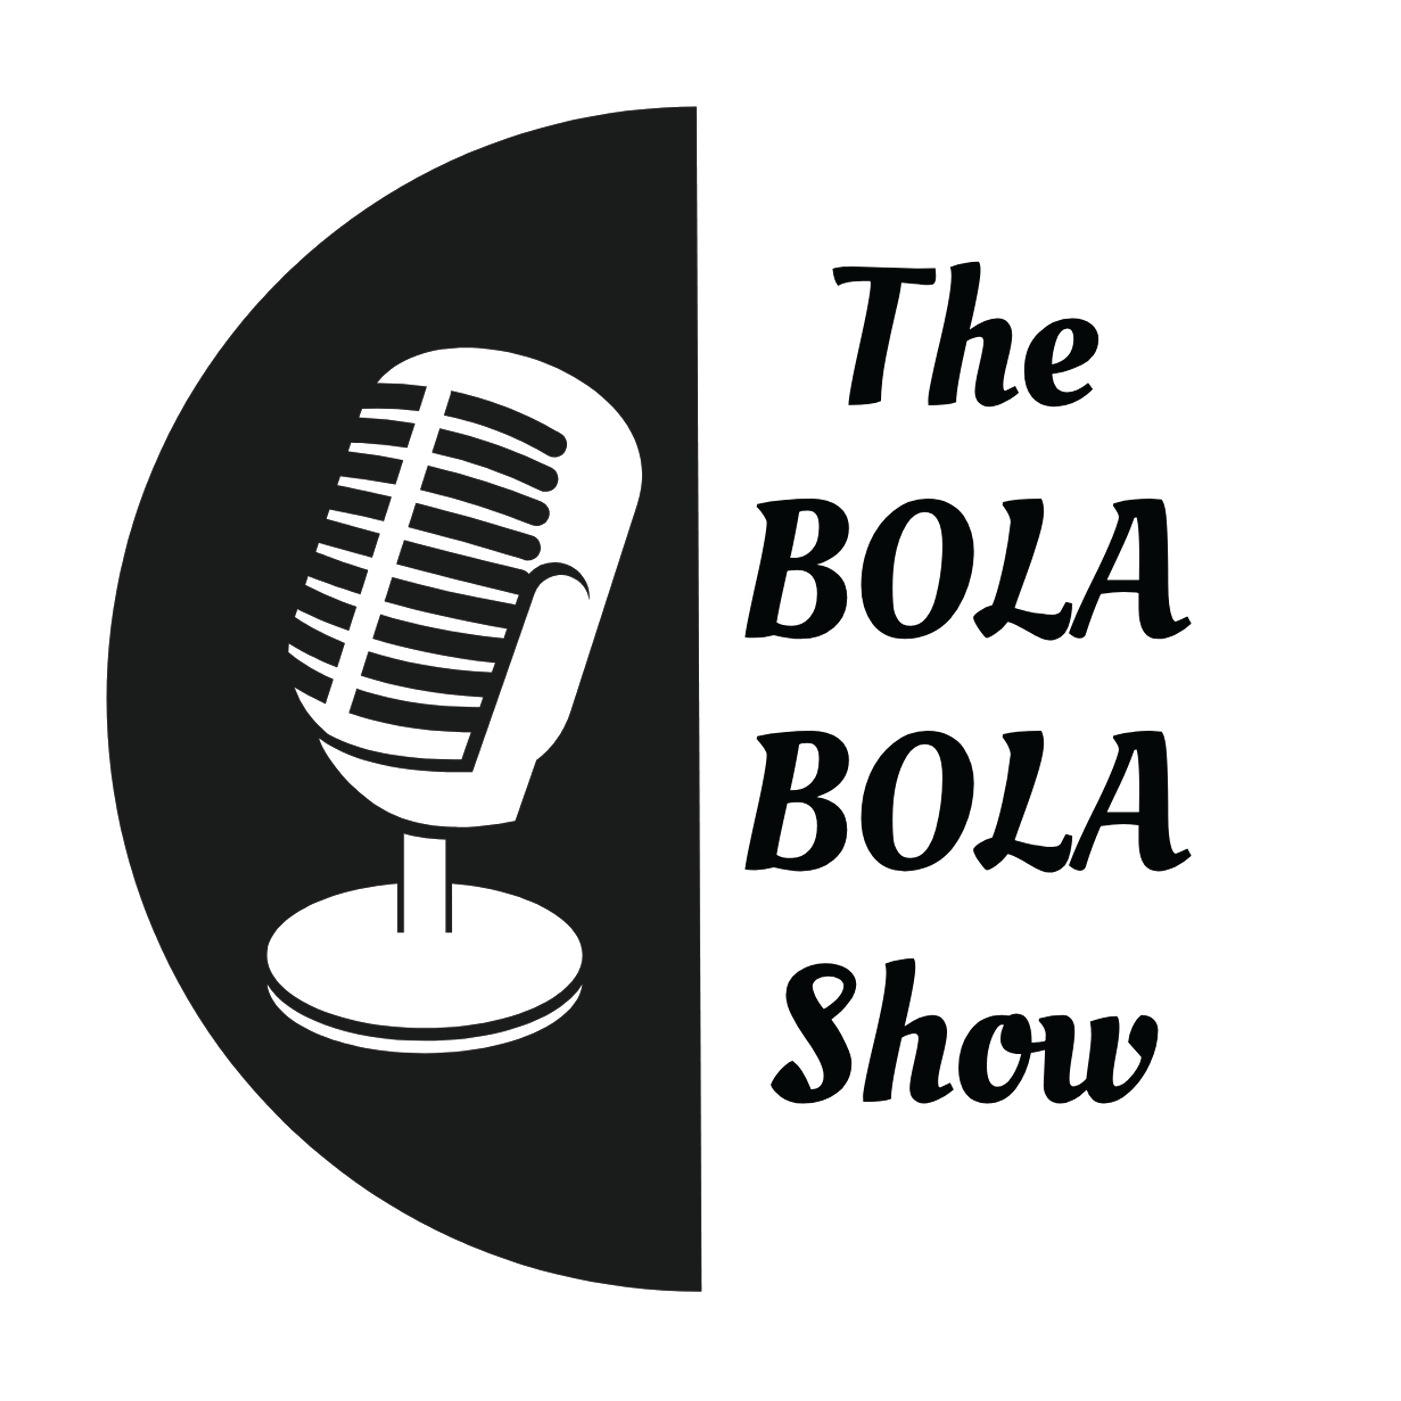 The Bola Bola Show